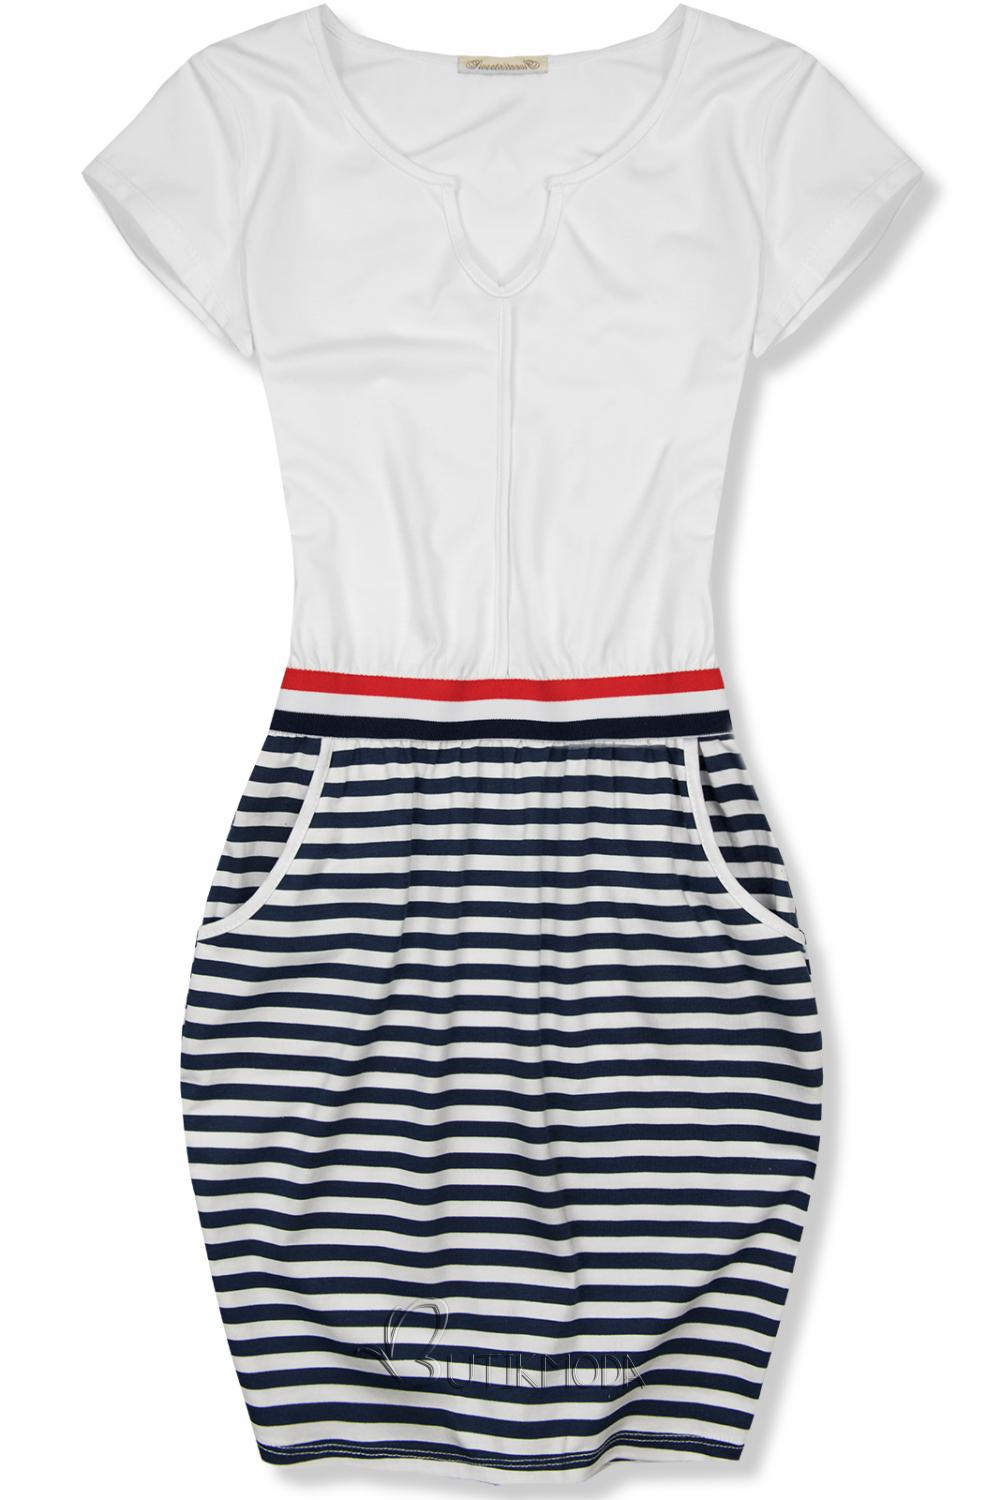 Marine Kleid weiß/blau II.